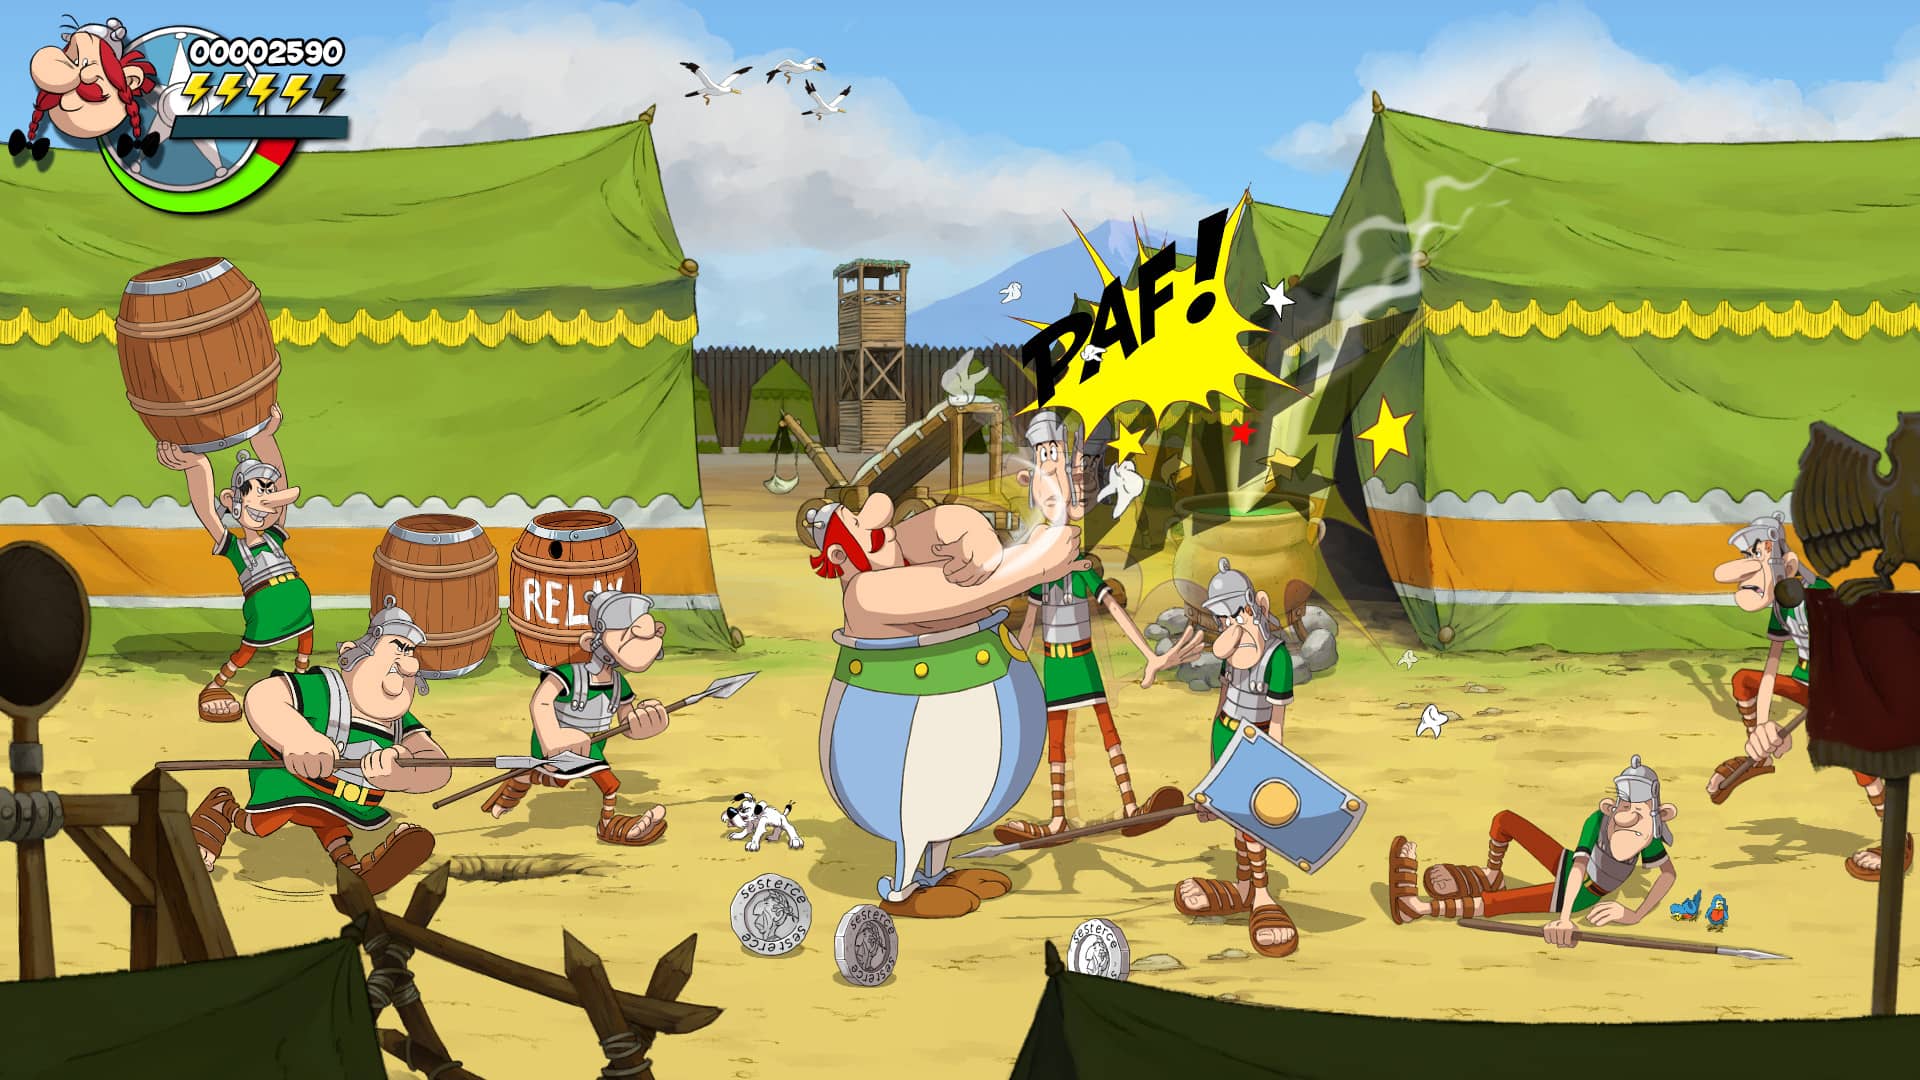 Asterix and Obelix Slap Them All coming soon